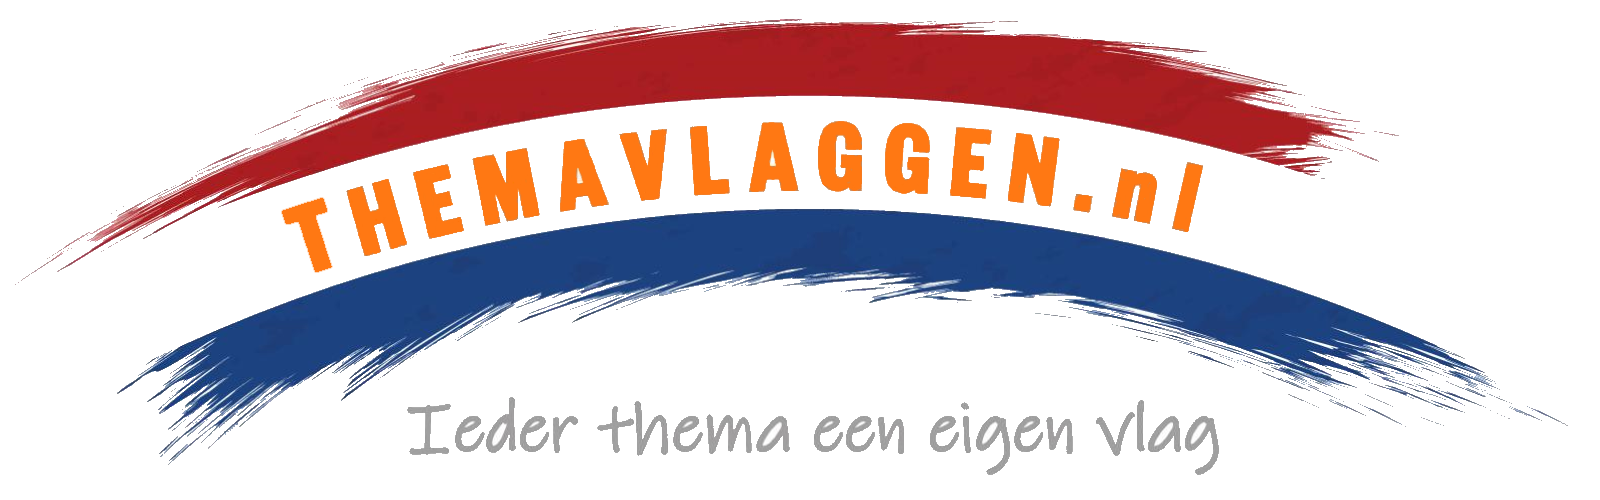 Themavlaggen.nl